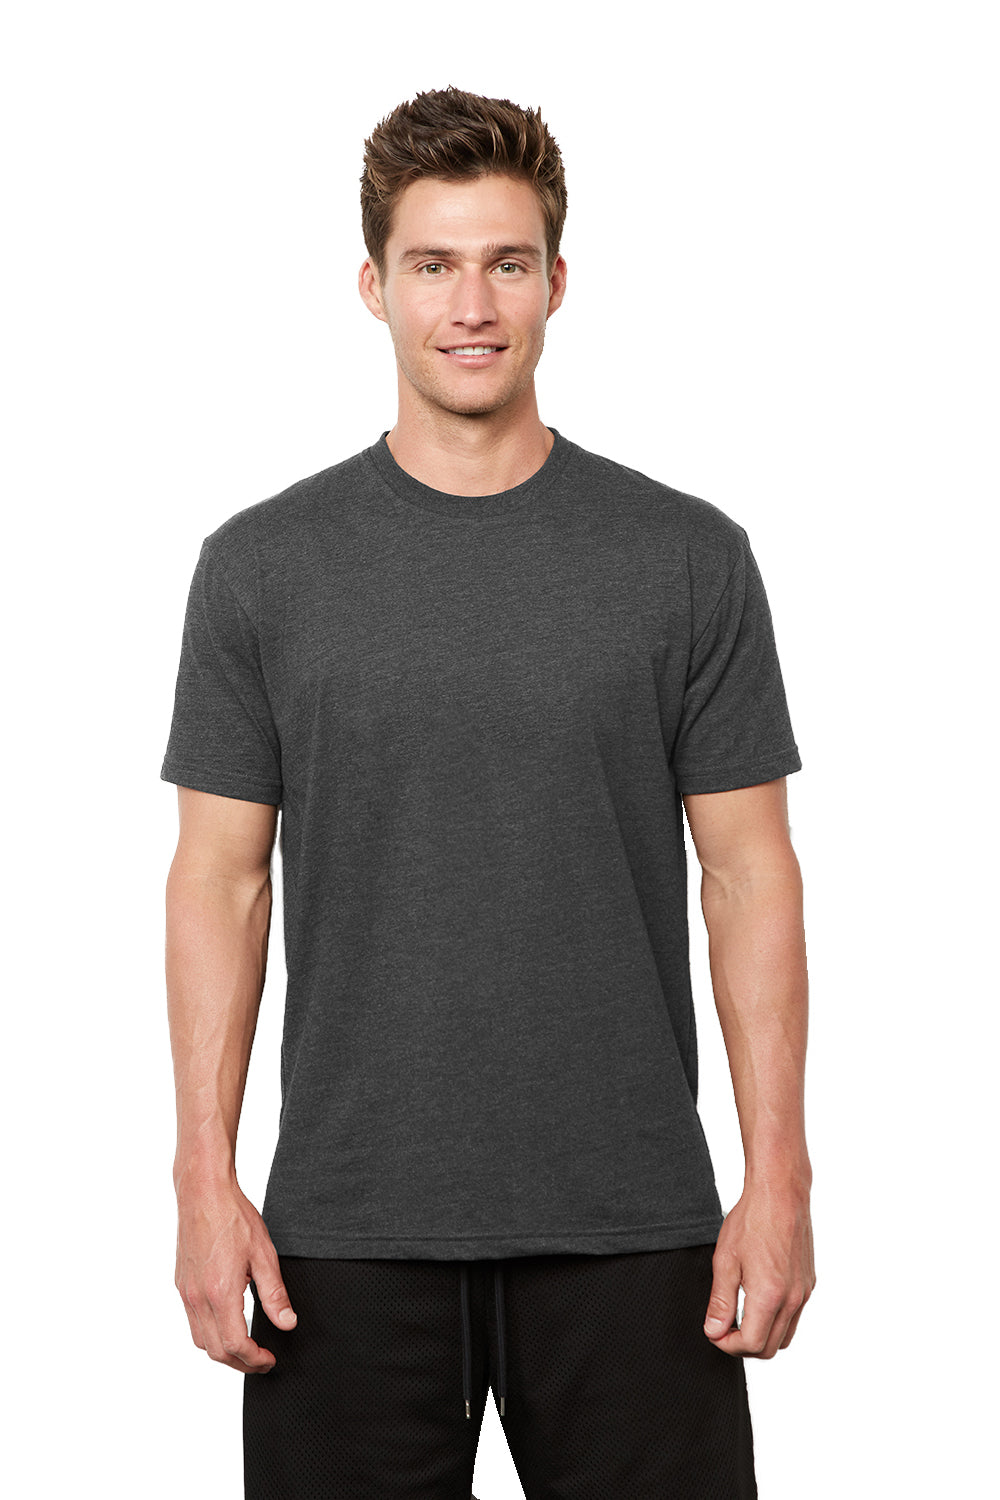 Next Level 4210 Mens Eco Performance Short Sleeve Crewneck T-Shirt Heather Dark Grey Front